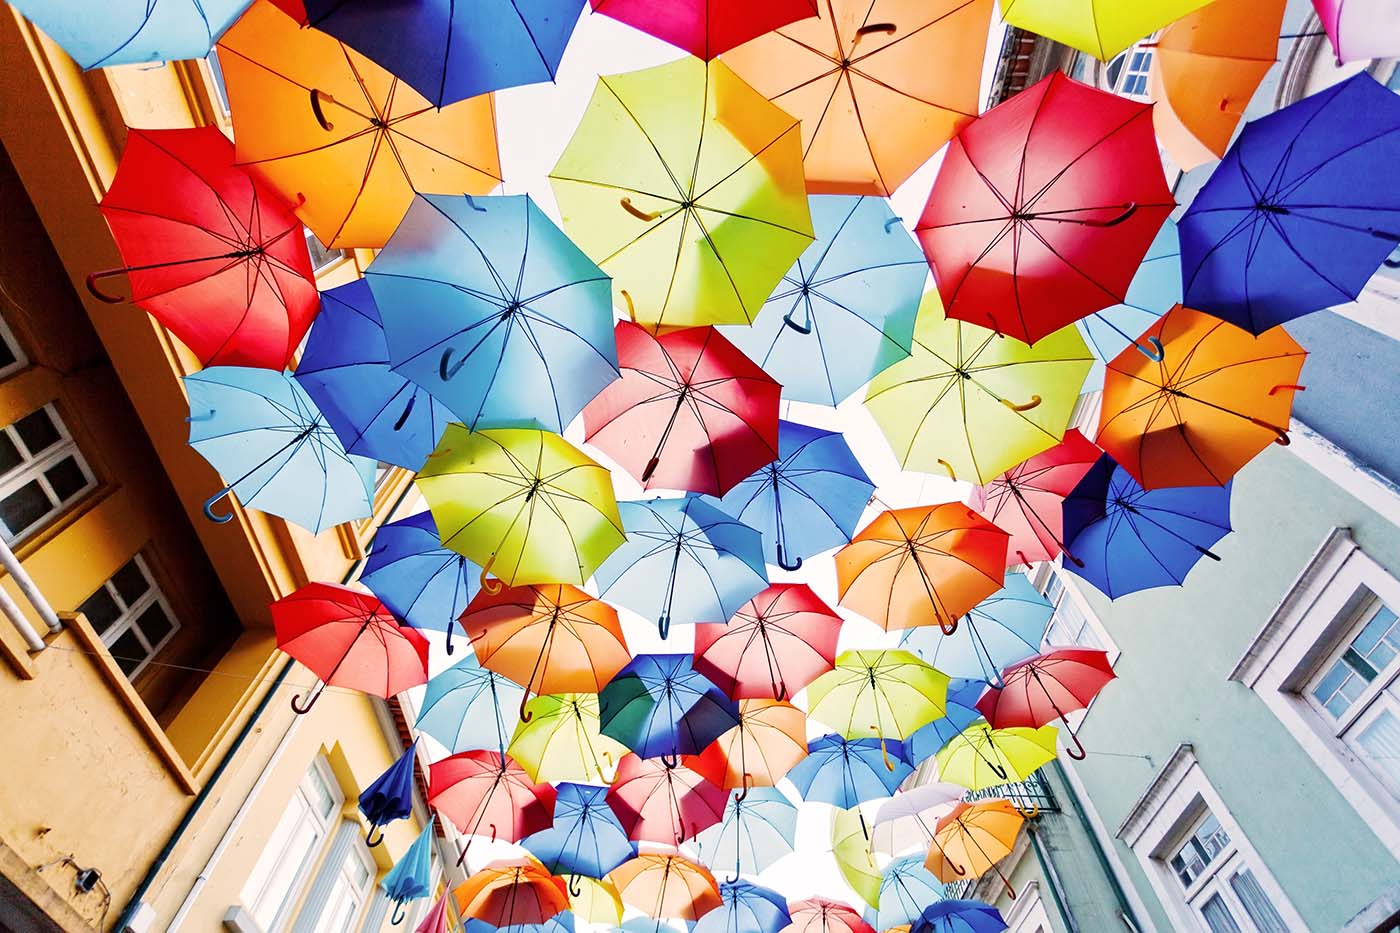 Street umbrellas in Agueda, Portugal